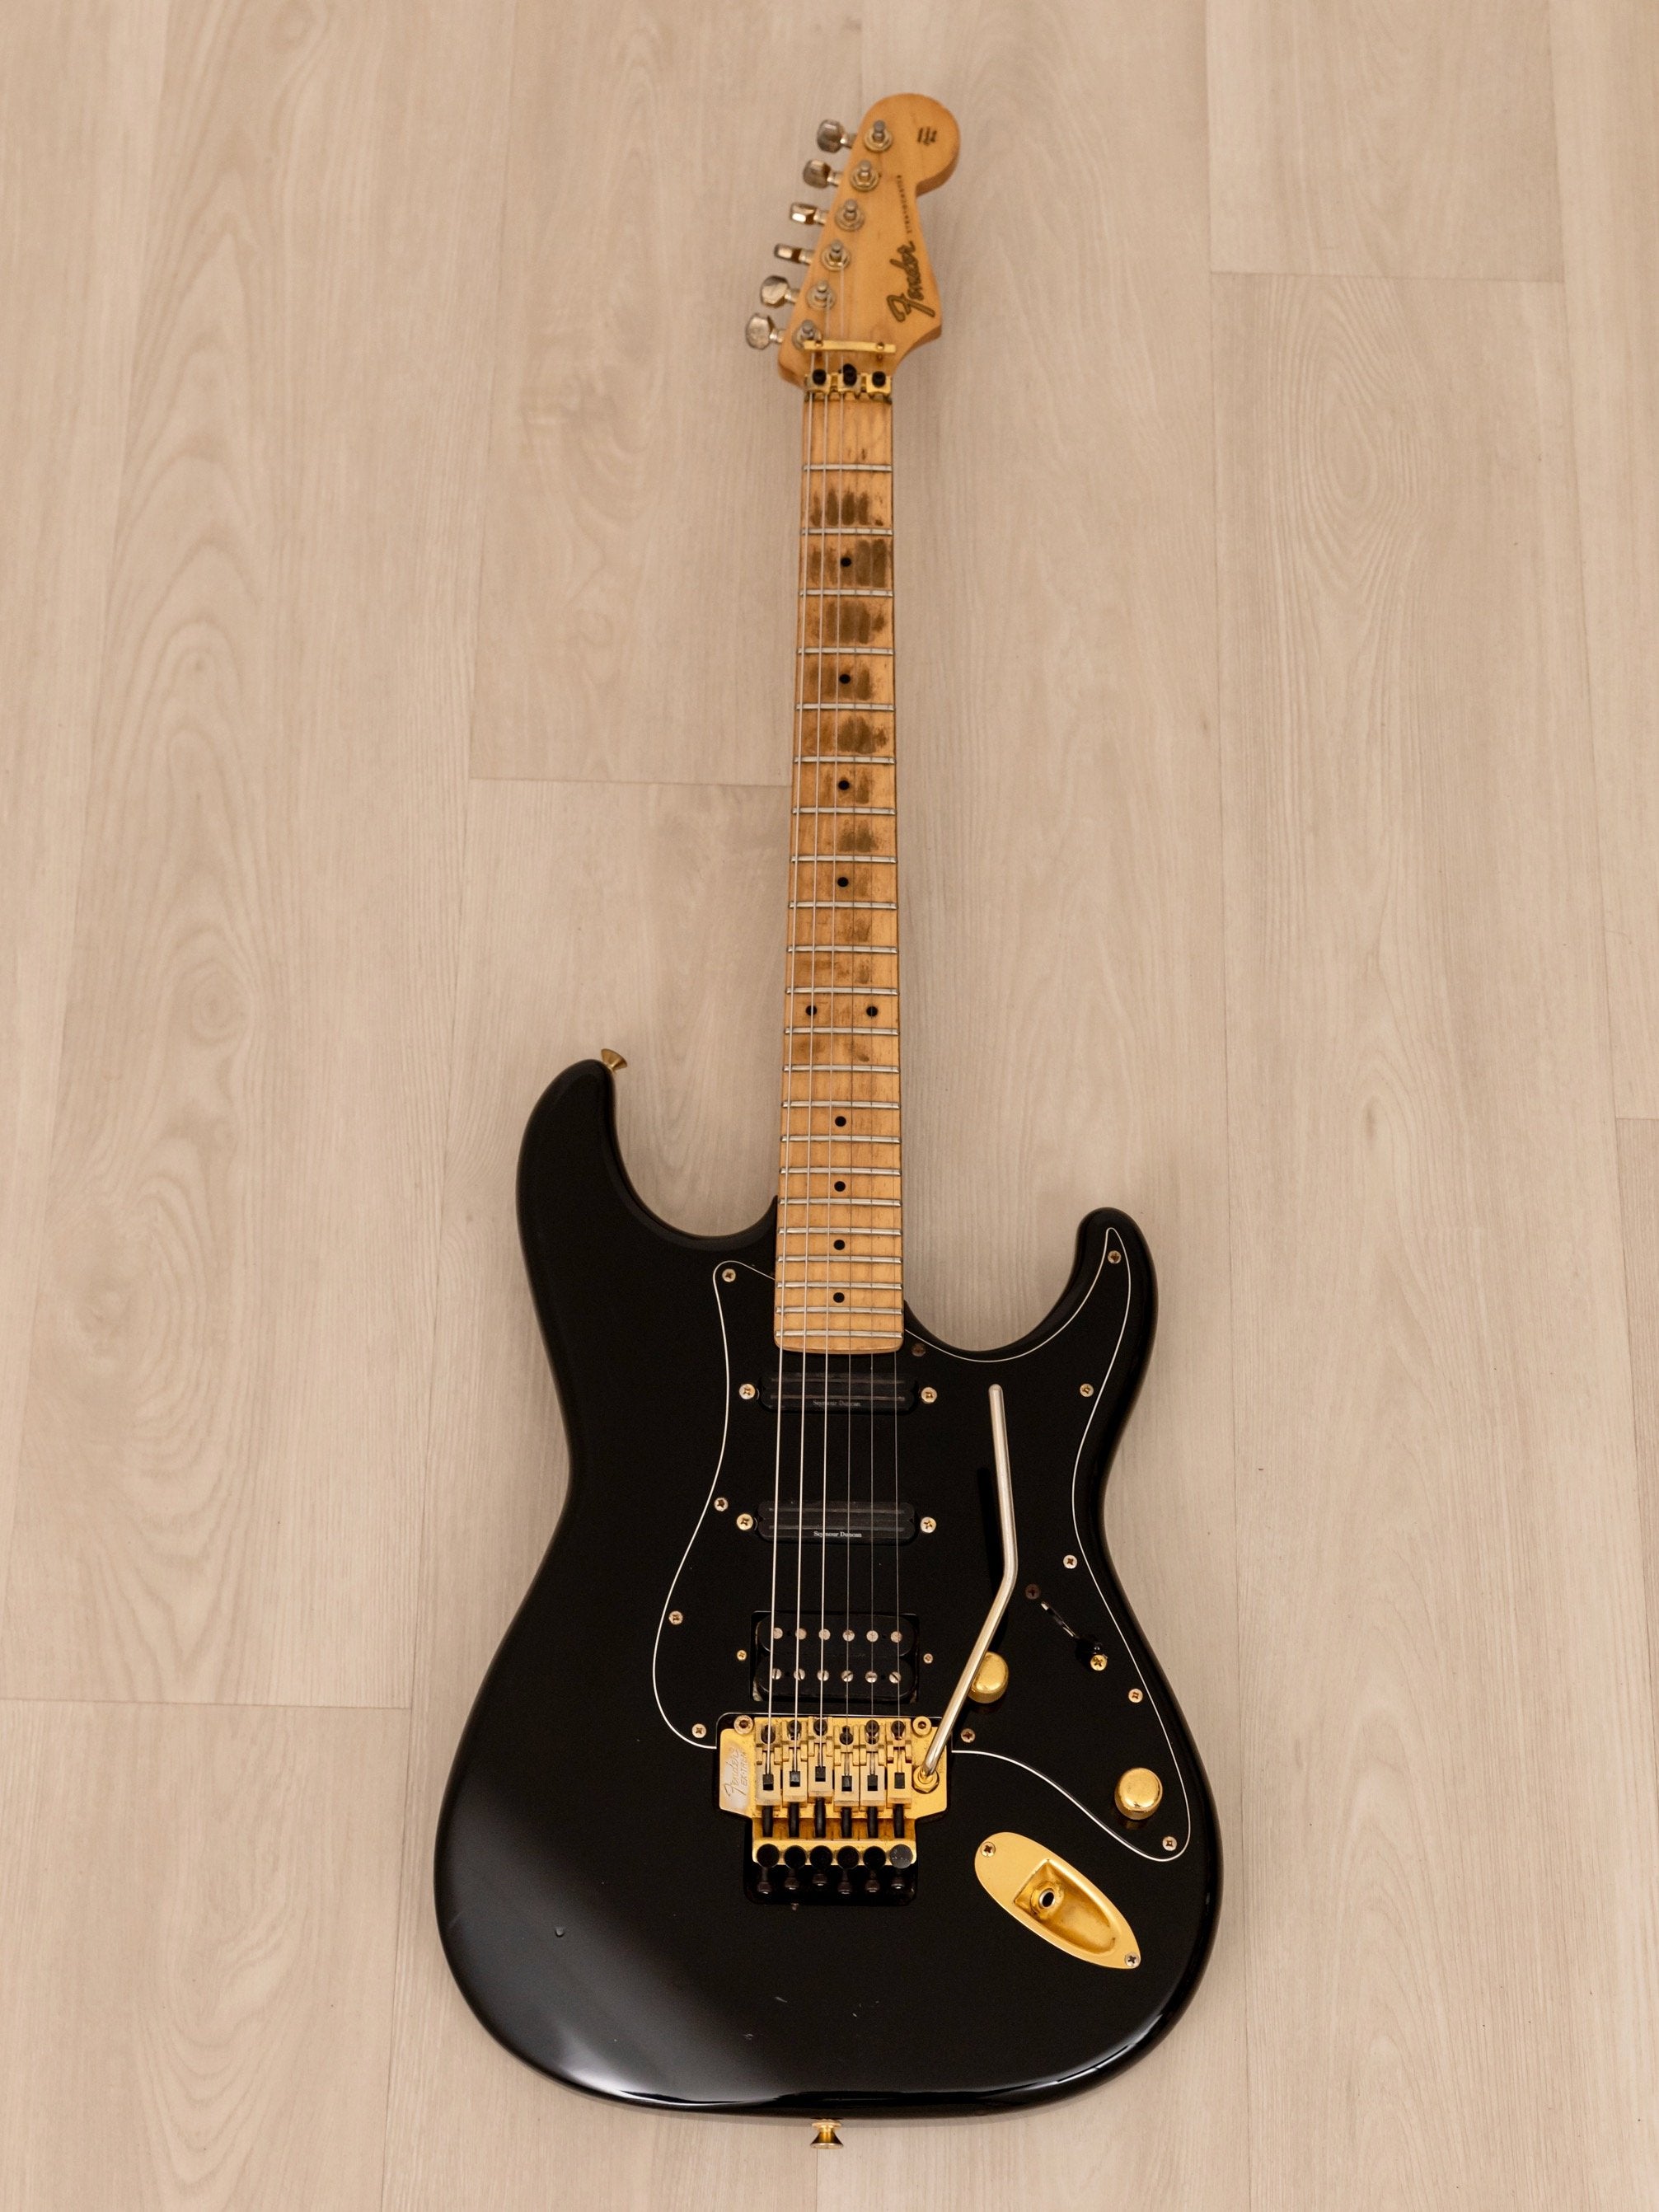 1988 Fender Stratocaster STR-70 SSH Black w/ Seymour Duncan Hot Rails & Floyd Rose, Japan MIJ Fujigen